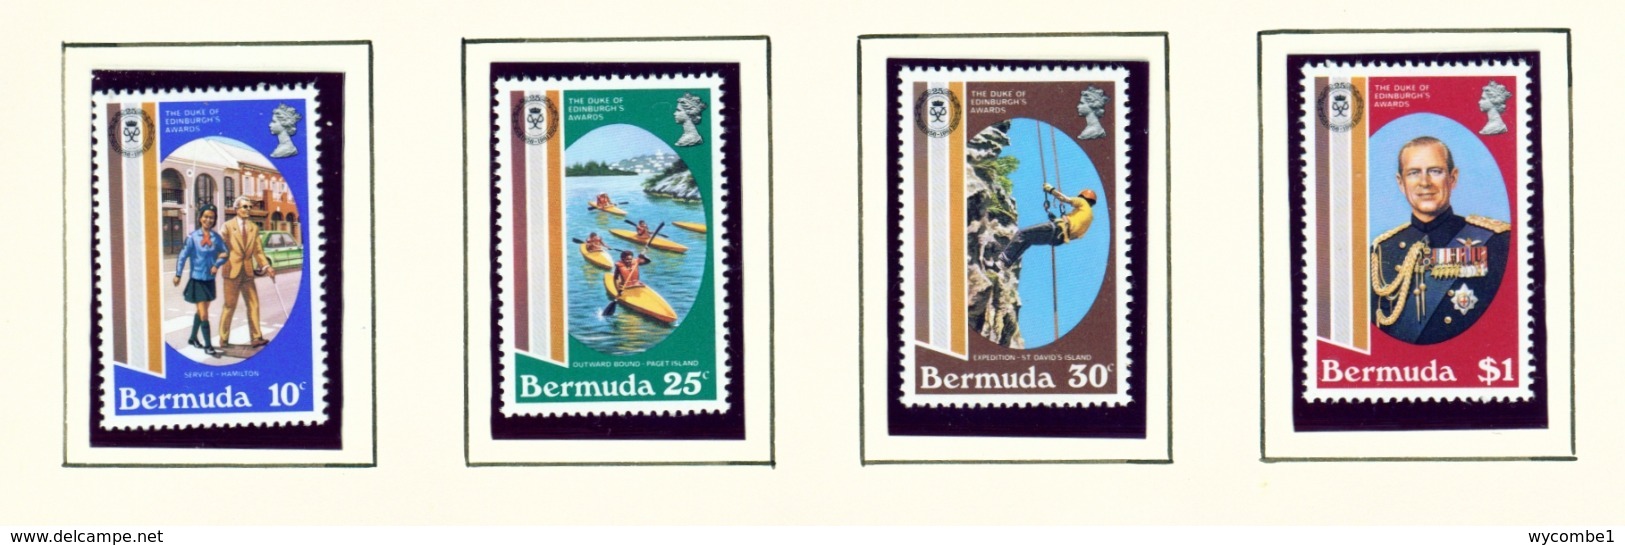 BERMUDA  -  1981 Duke Of Edinburgh Award Set Unmounted/Never Hinged Mint - Bermuda